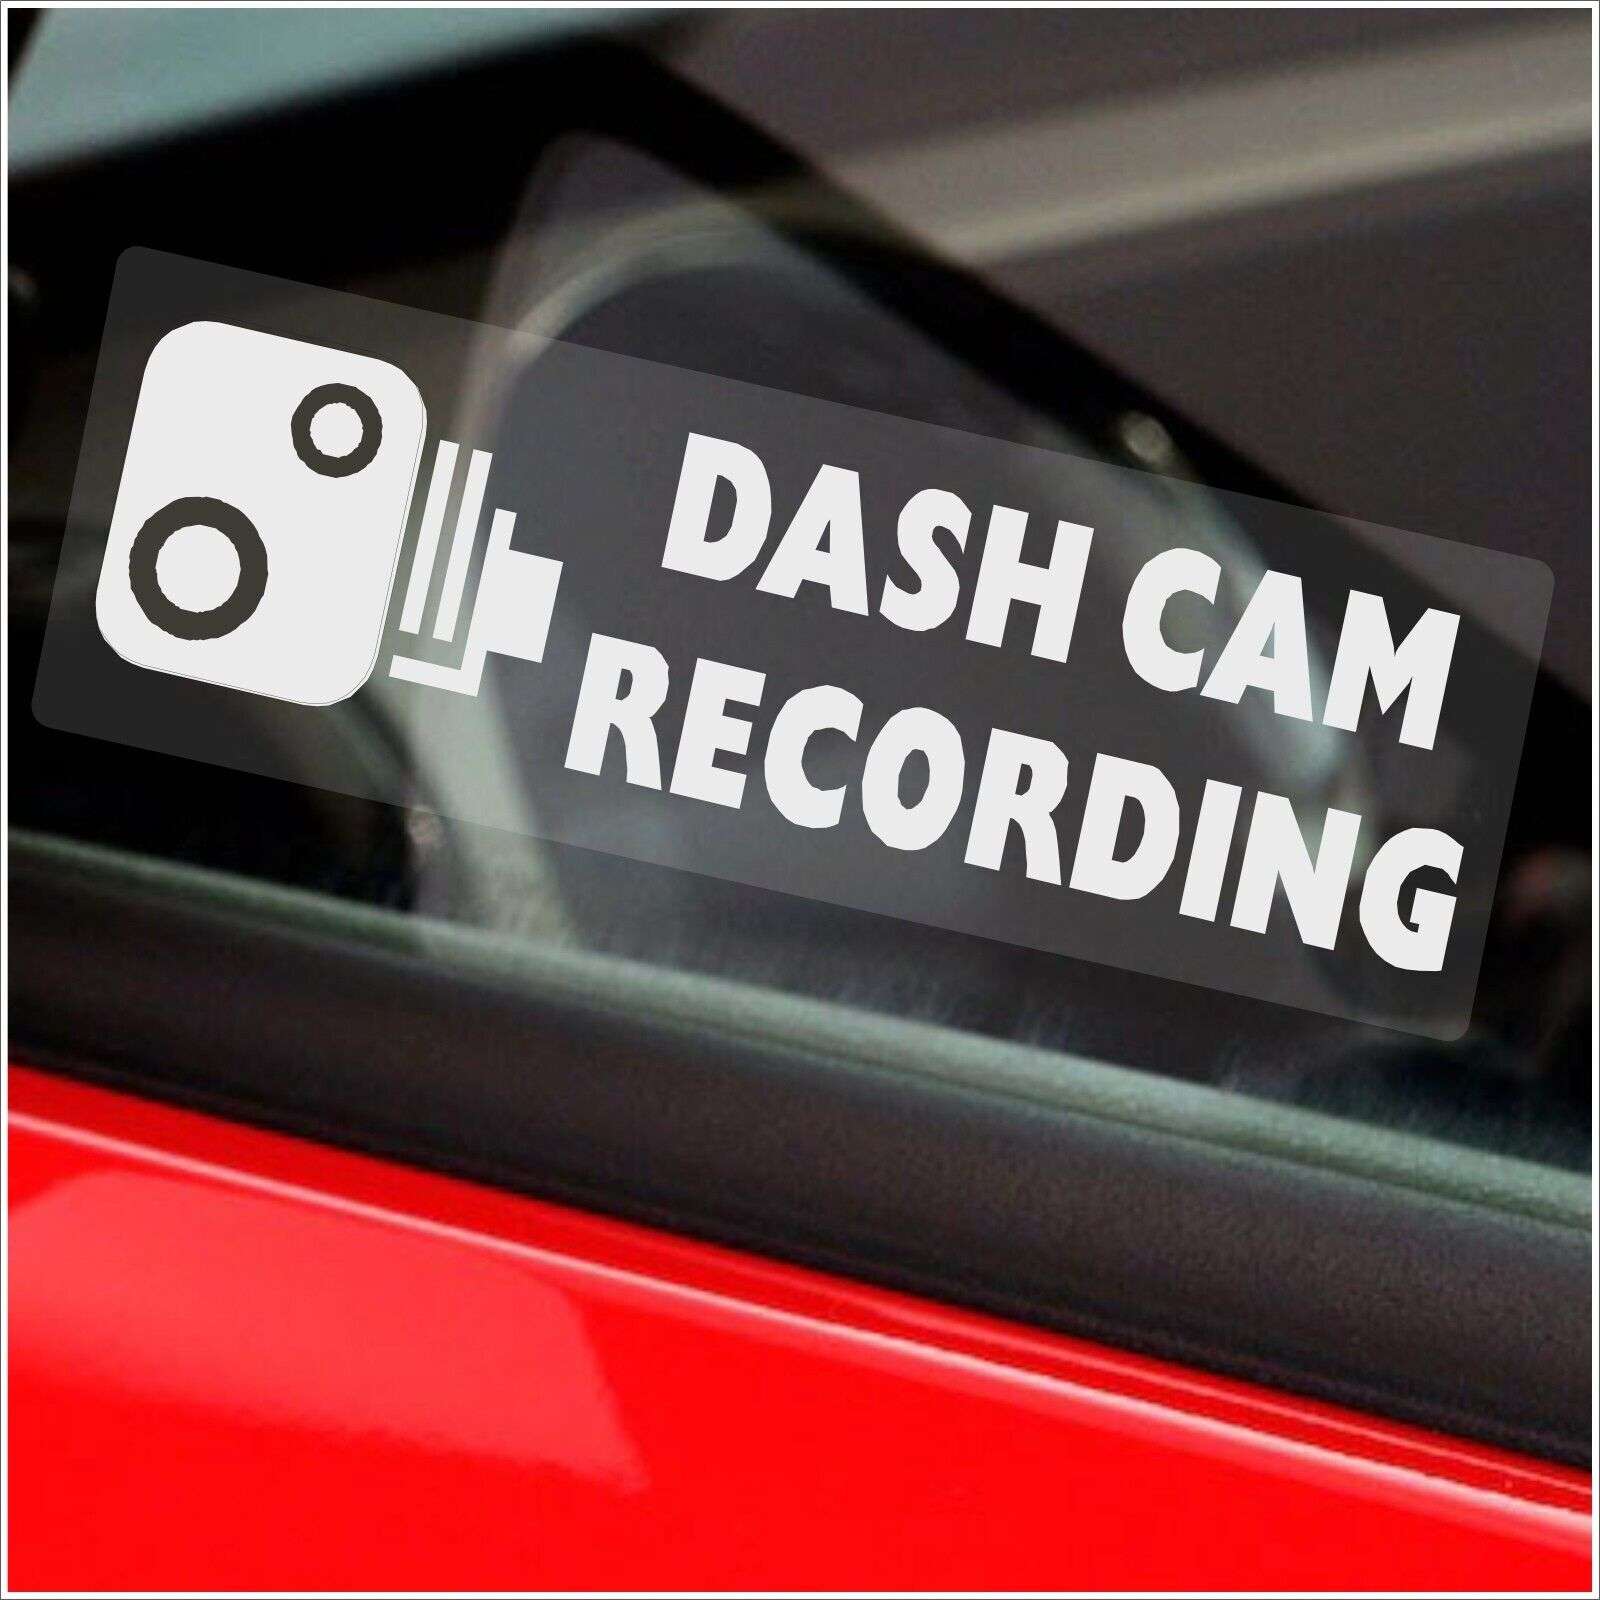 Adhesivo para coche Dash Cam Recording blanco - 76x25mm - ventana interior